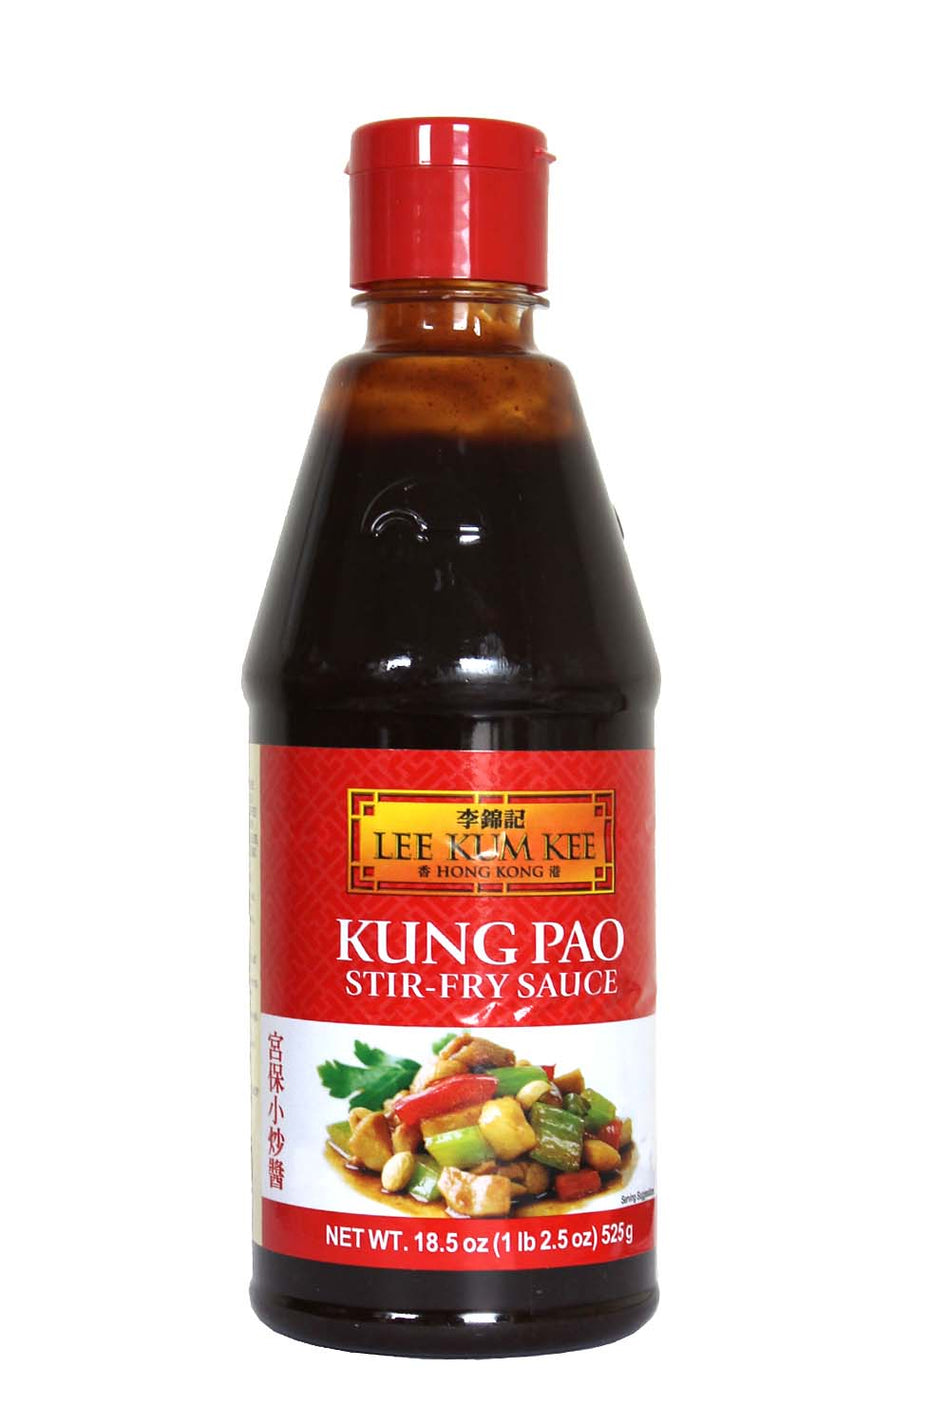 Lee Kum Kee  Kung Pao Stir-Fry Sauce